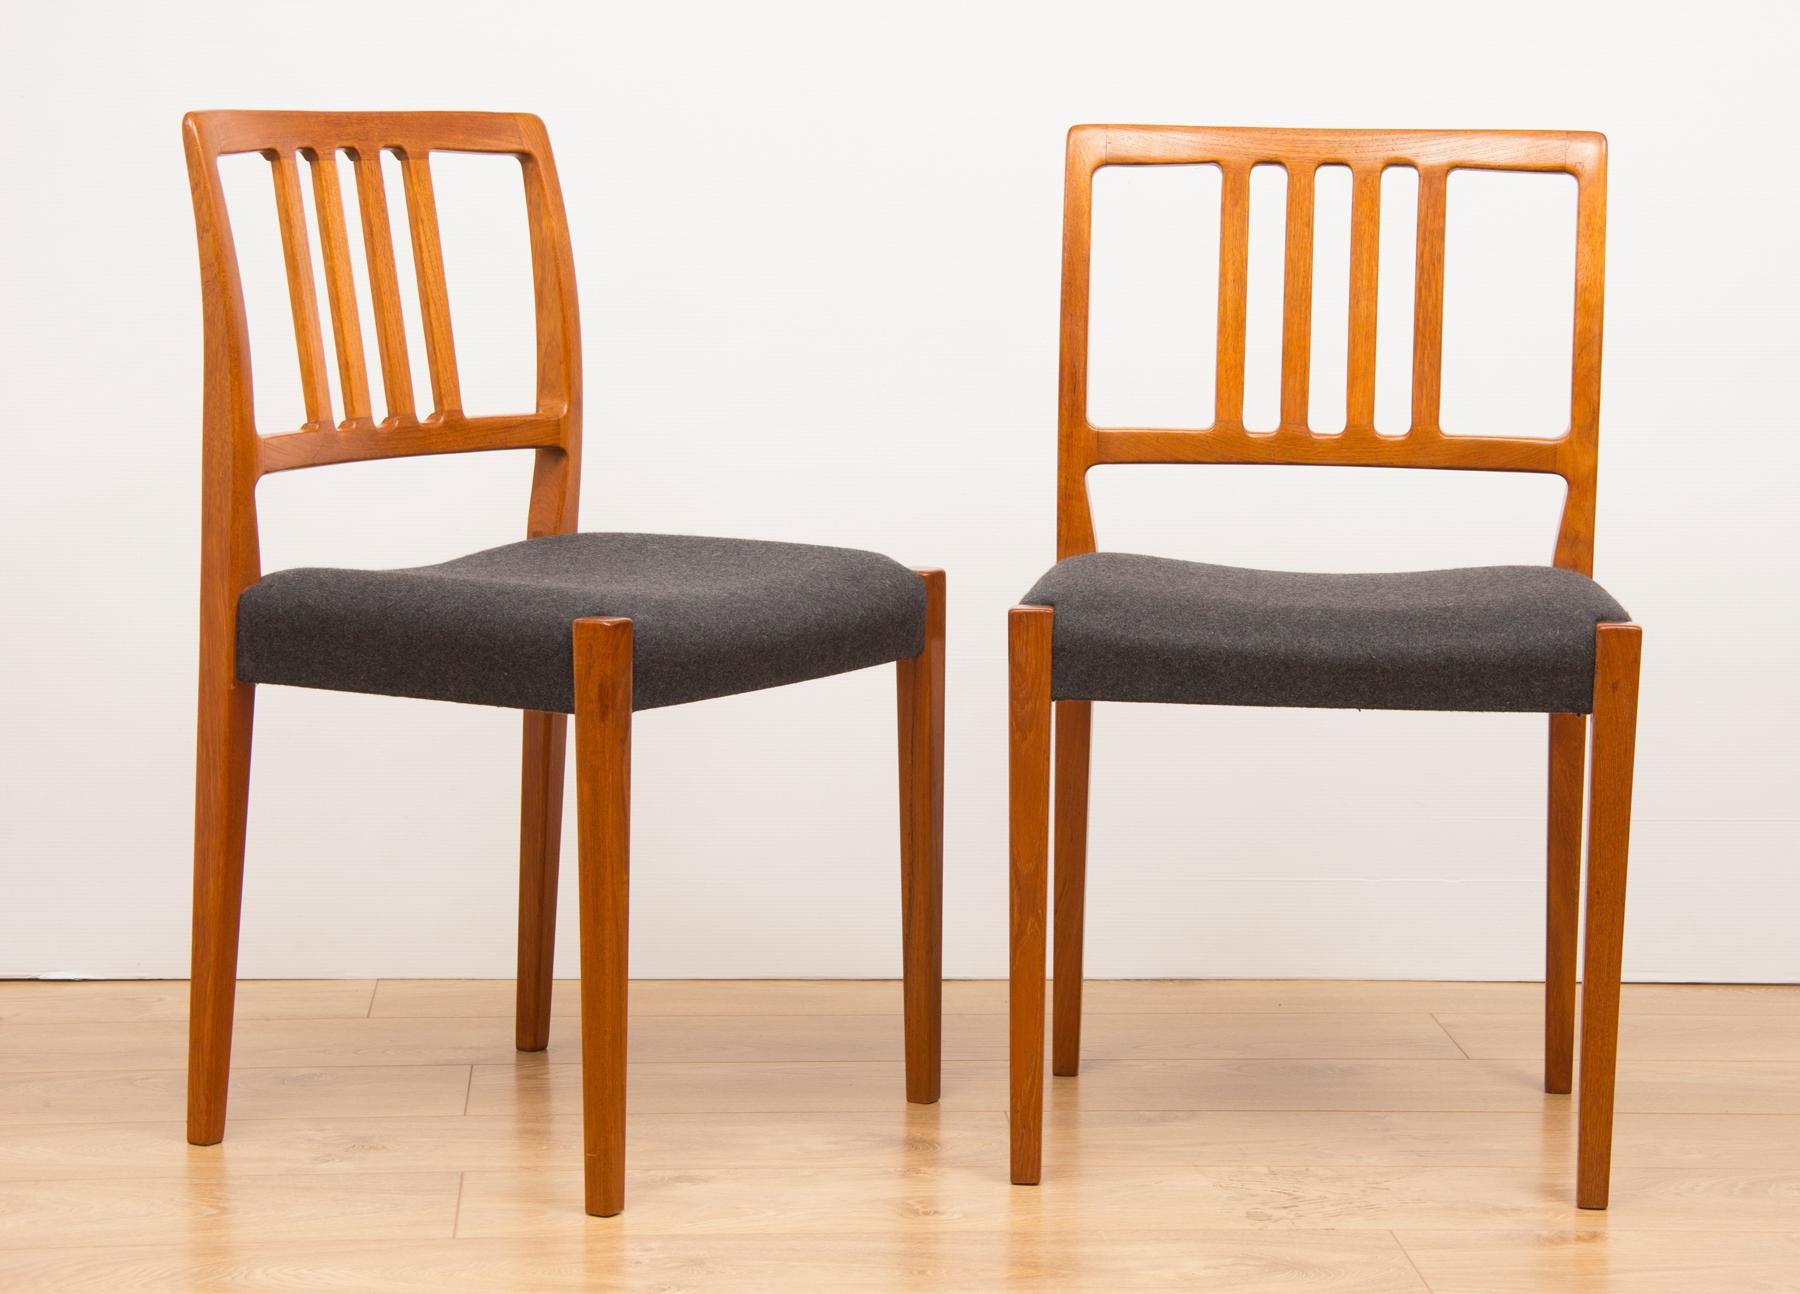 Set of 4 teak dining chairs by Hugo Troeds Bjärnum, Swedish, circa 1960s. Newly upholstered.